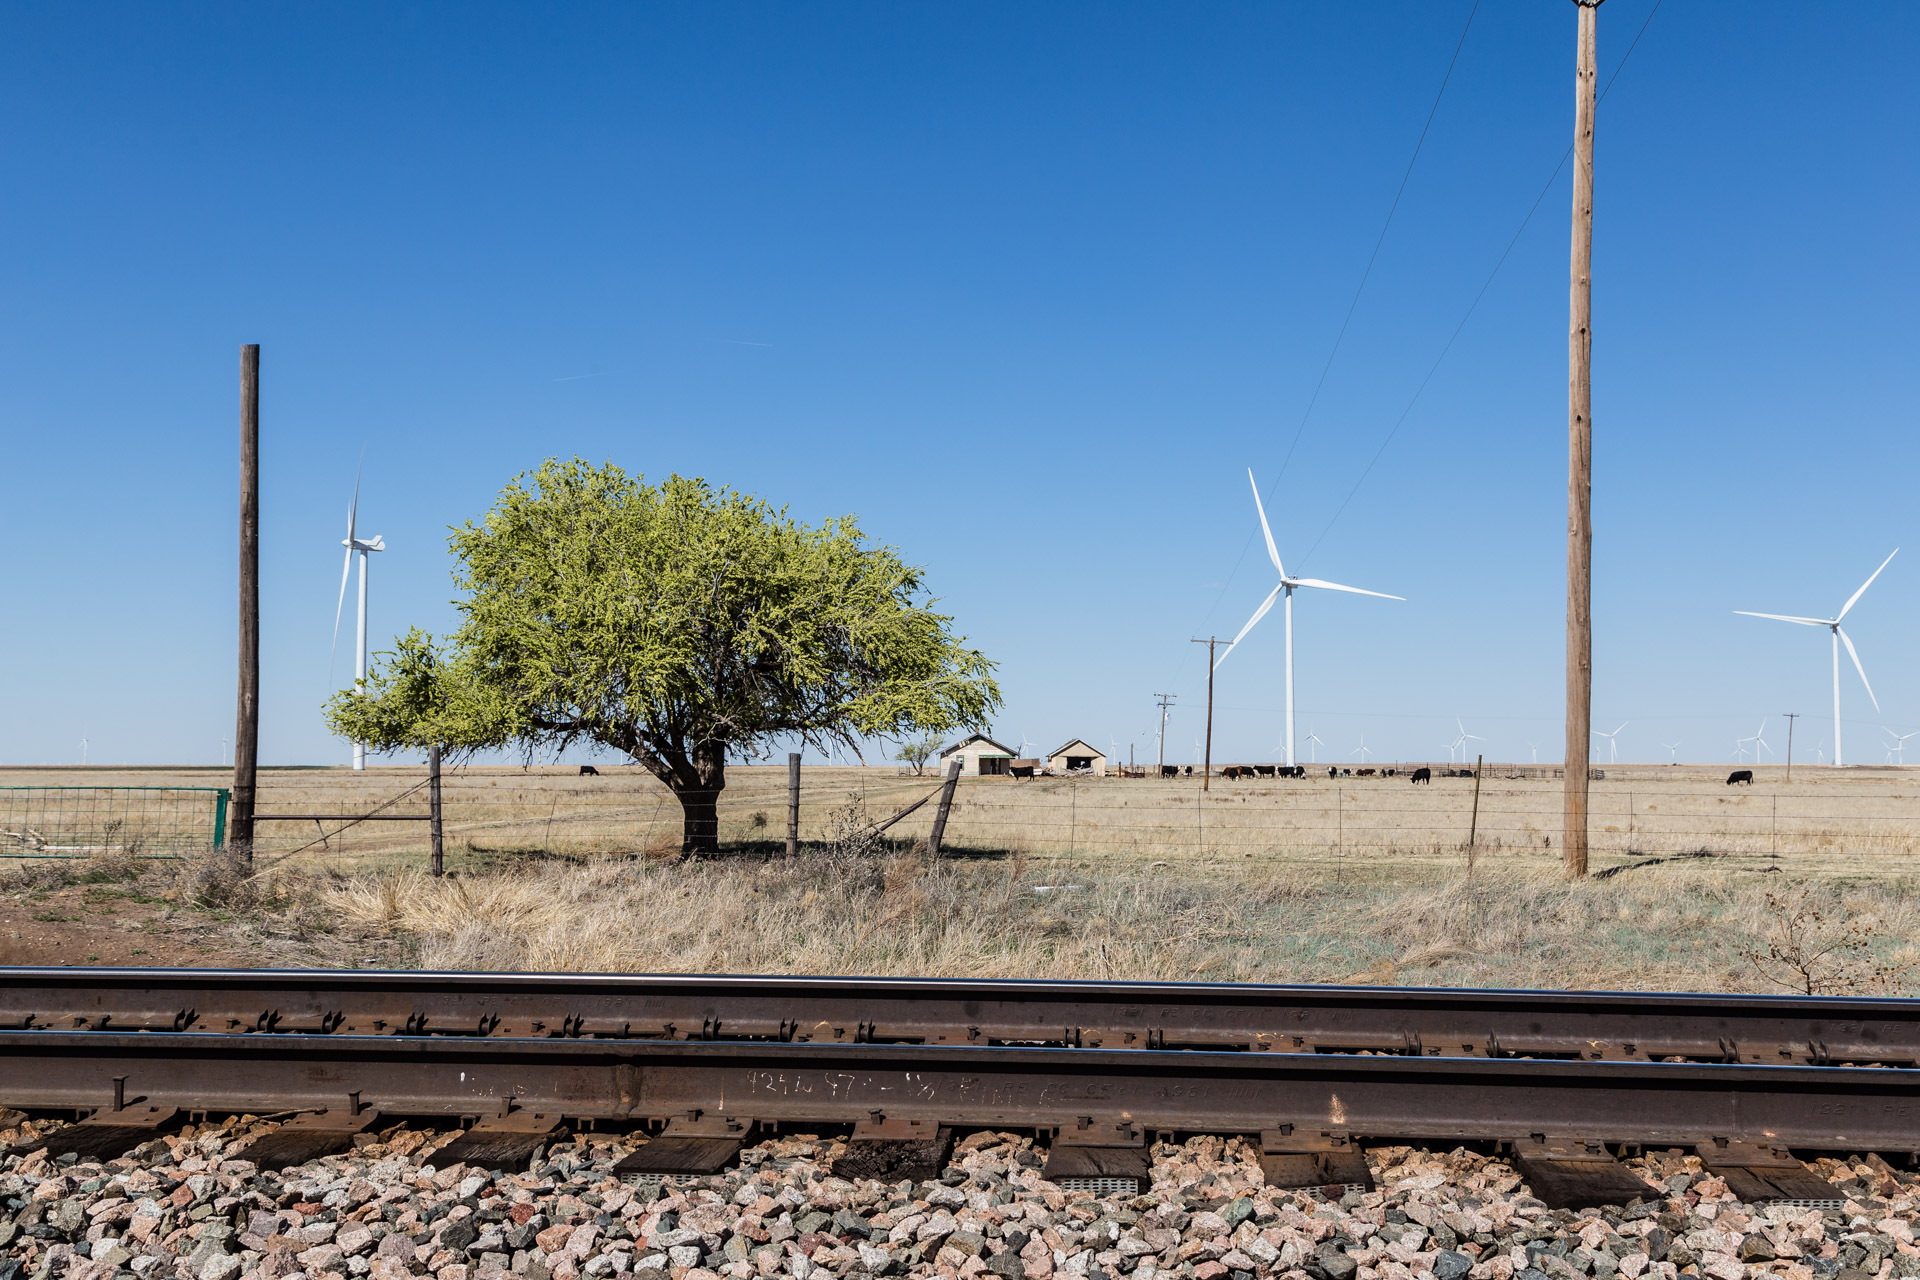 Claude, Texas - Railroad Tracks and Wind Turbines House